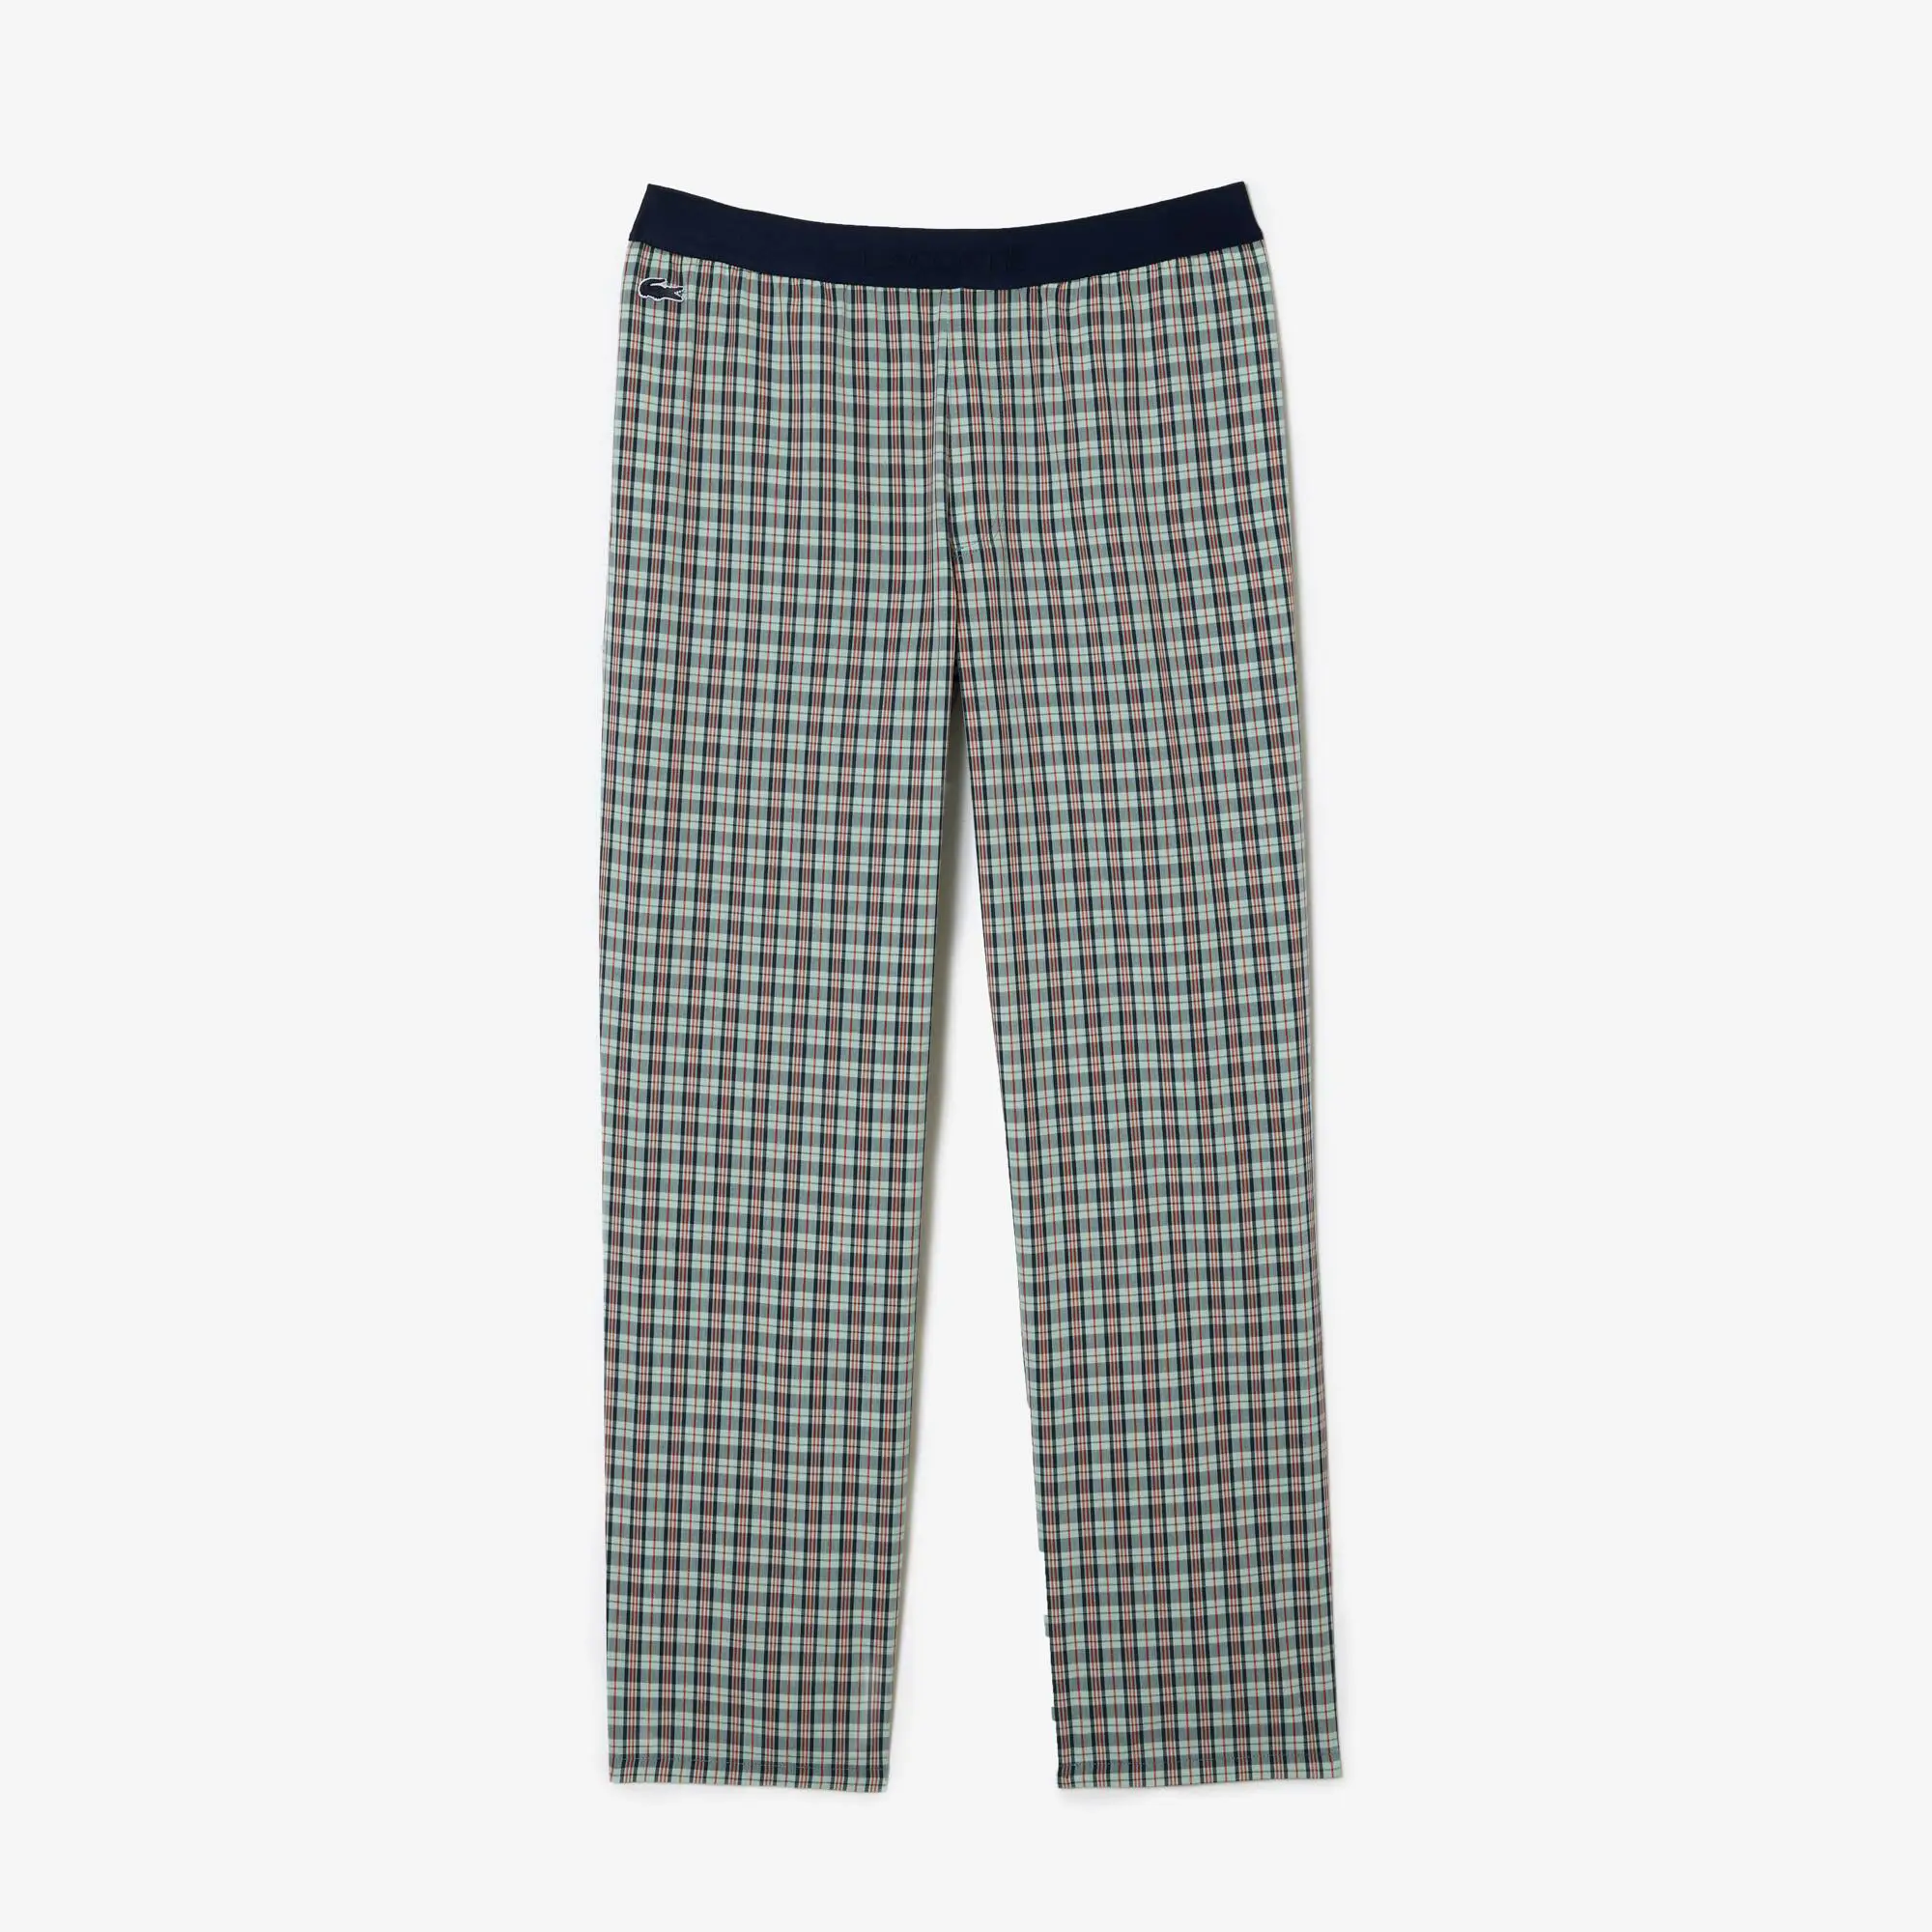 Lacoste Men’s Cotton Poplin Check Print Pajama Pants. 2